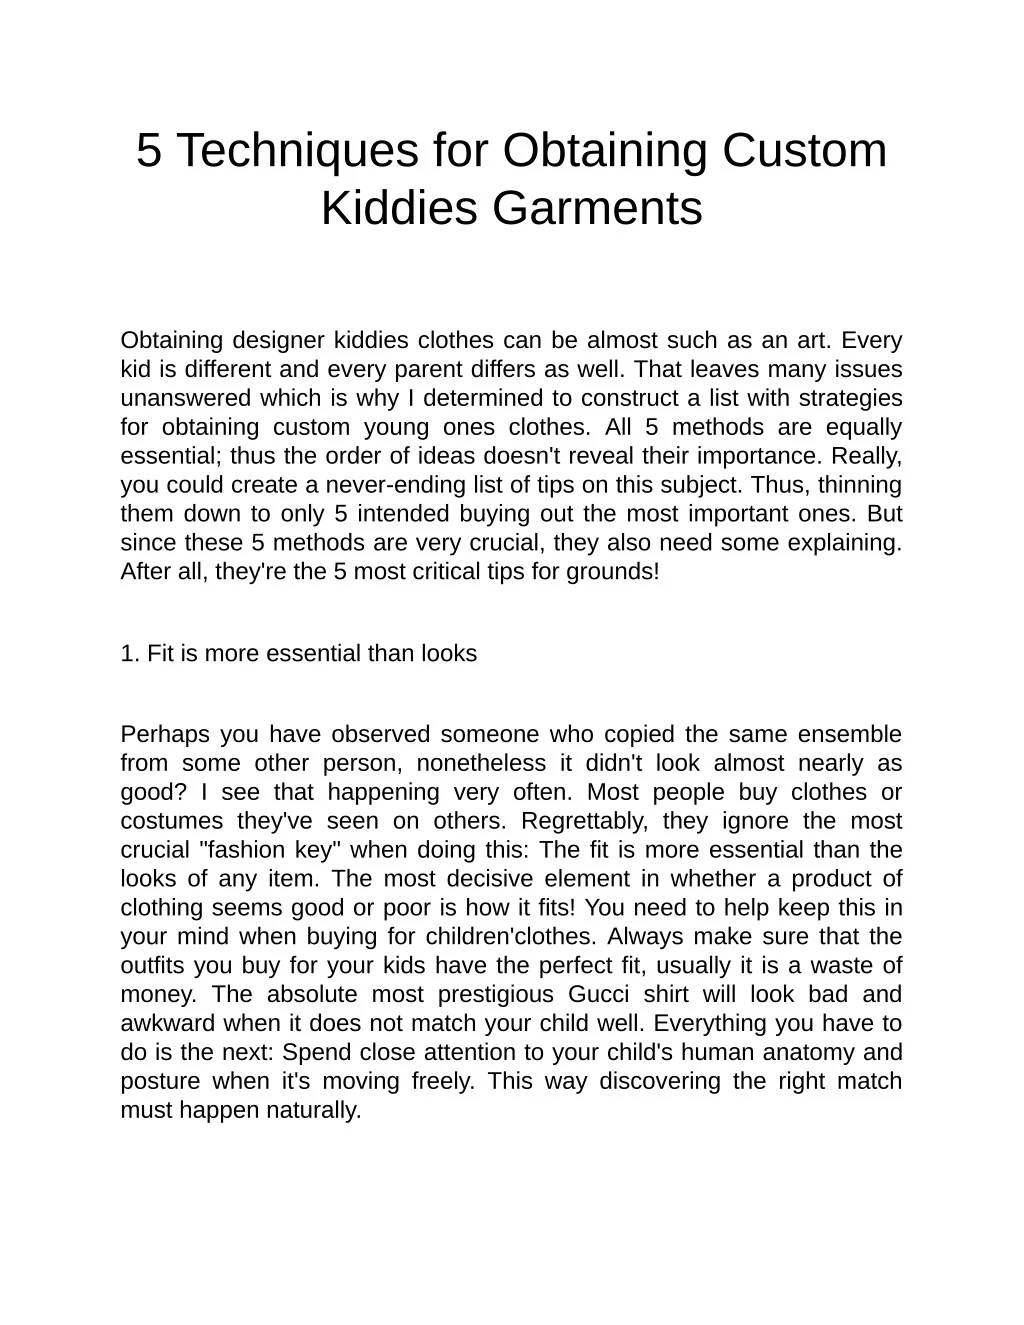 5 techniques for obtaining custom kiddies garments